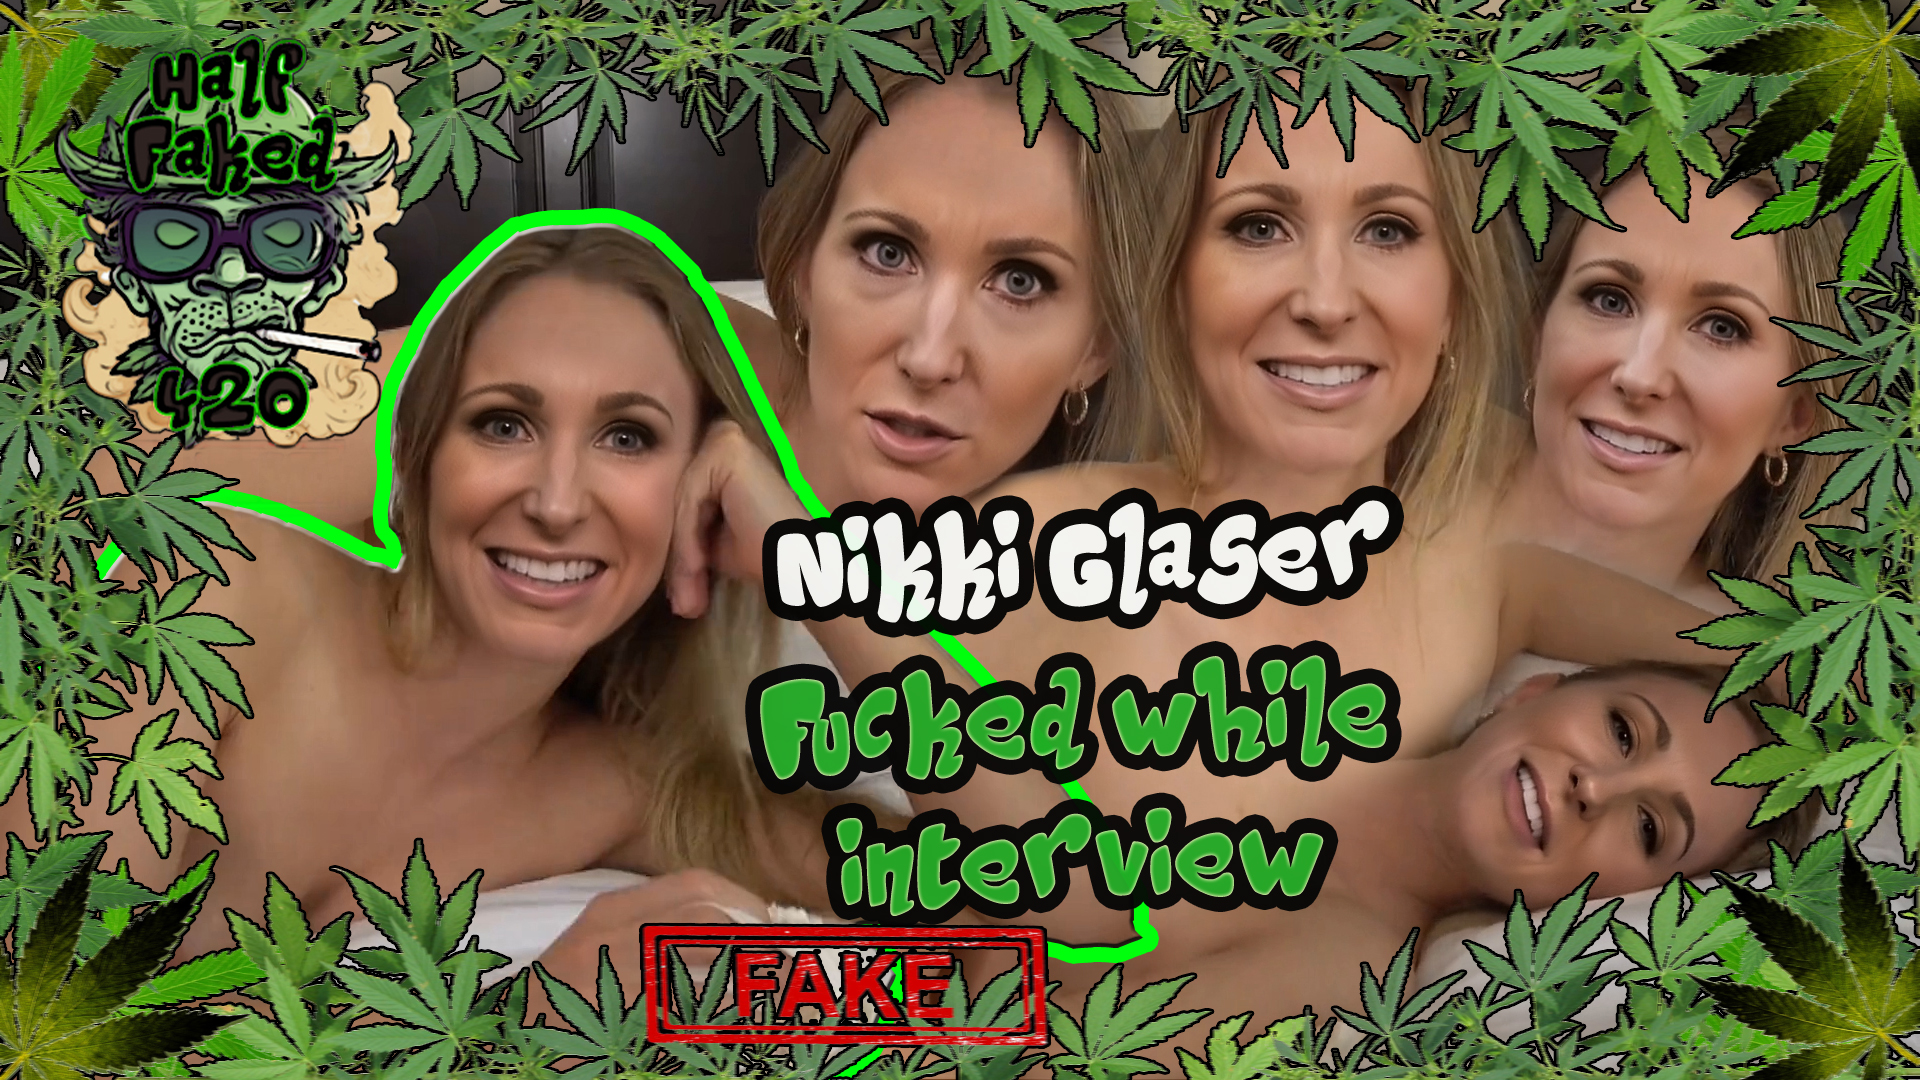 Nikki Glaser - Fucked while interview | FAKE